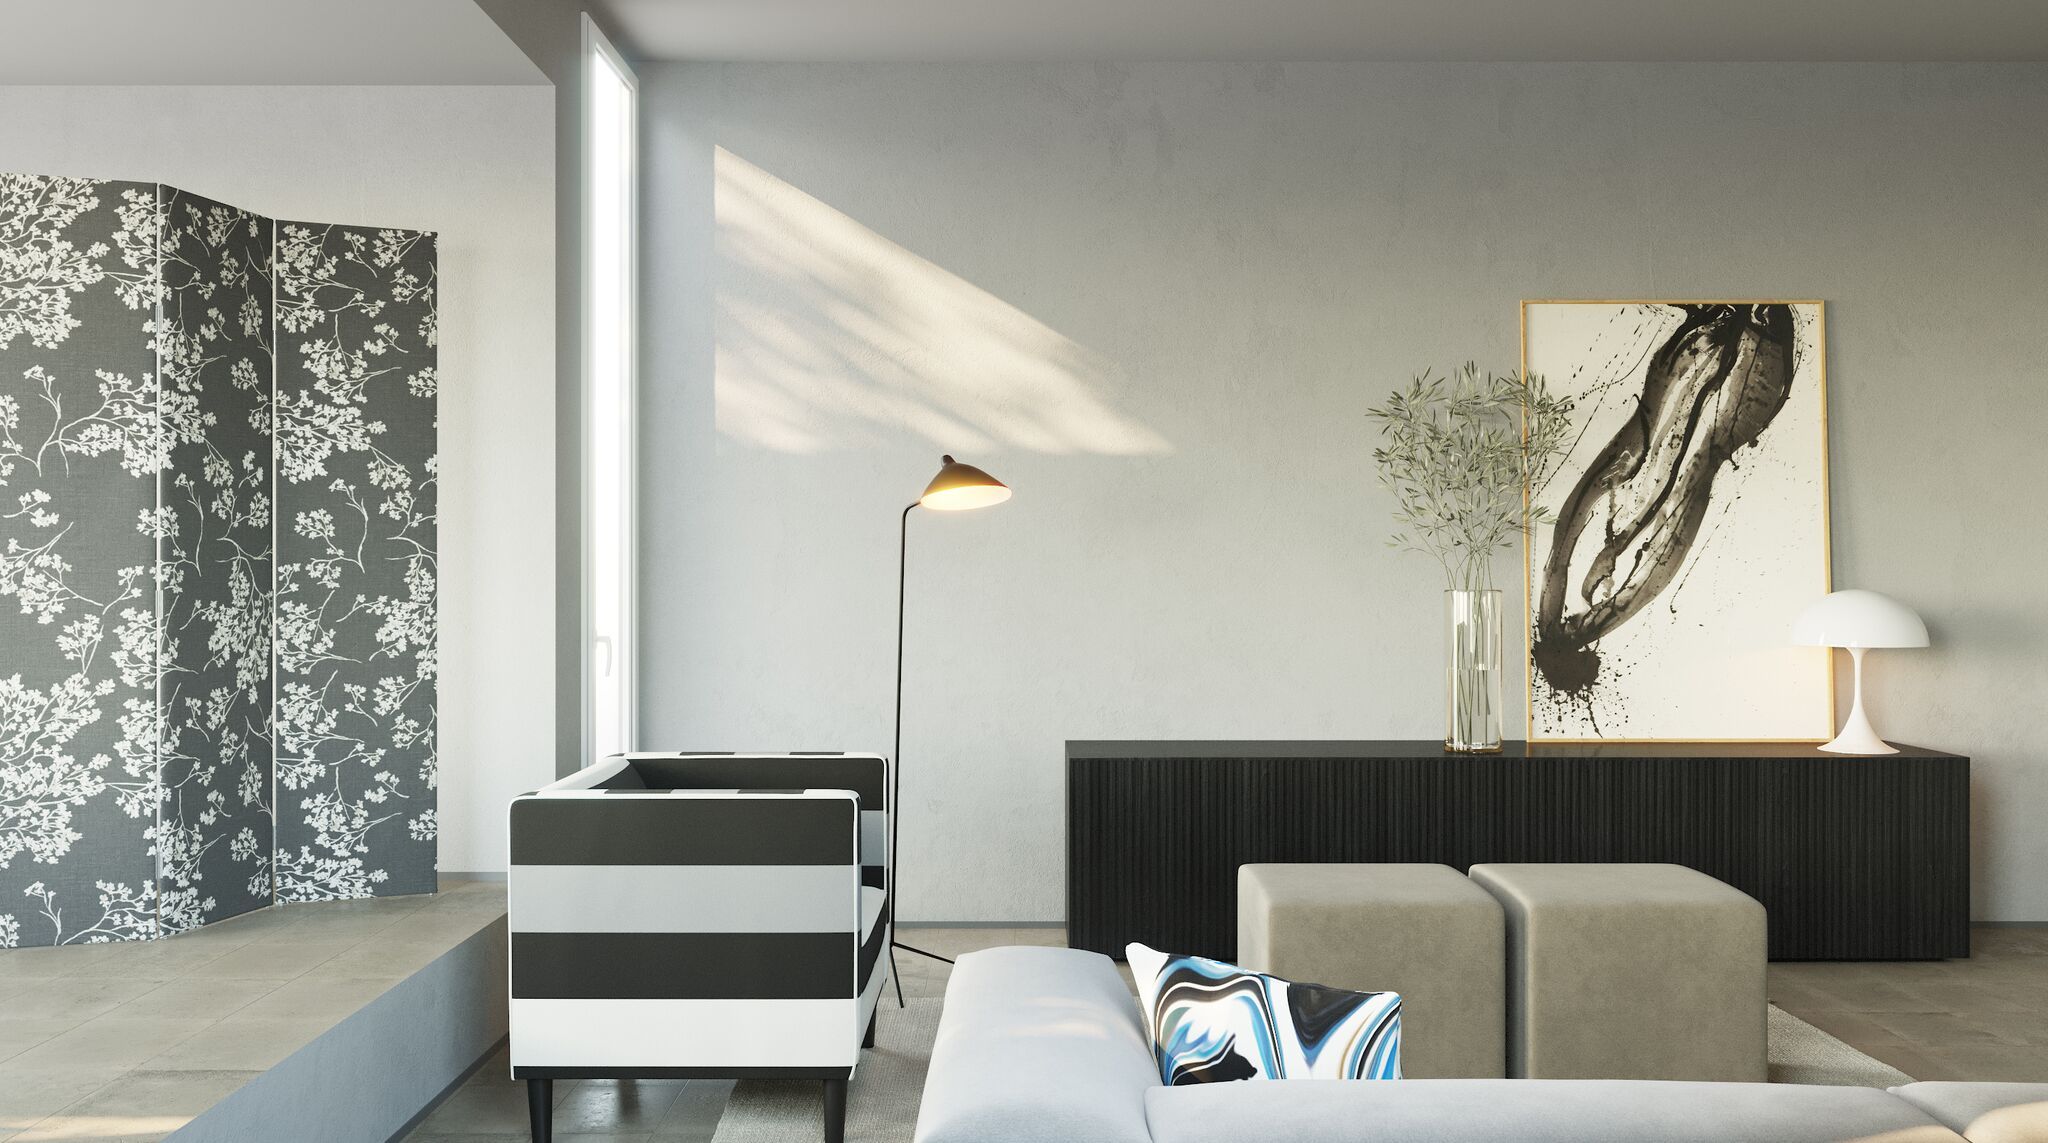 Gambar Plaster Ceiling Modern Concept Modern Home Interior